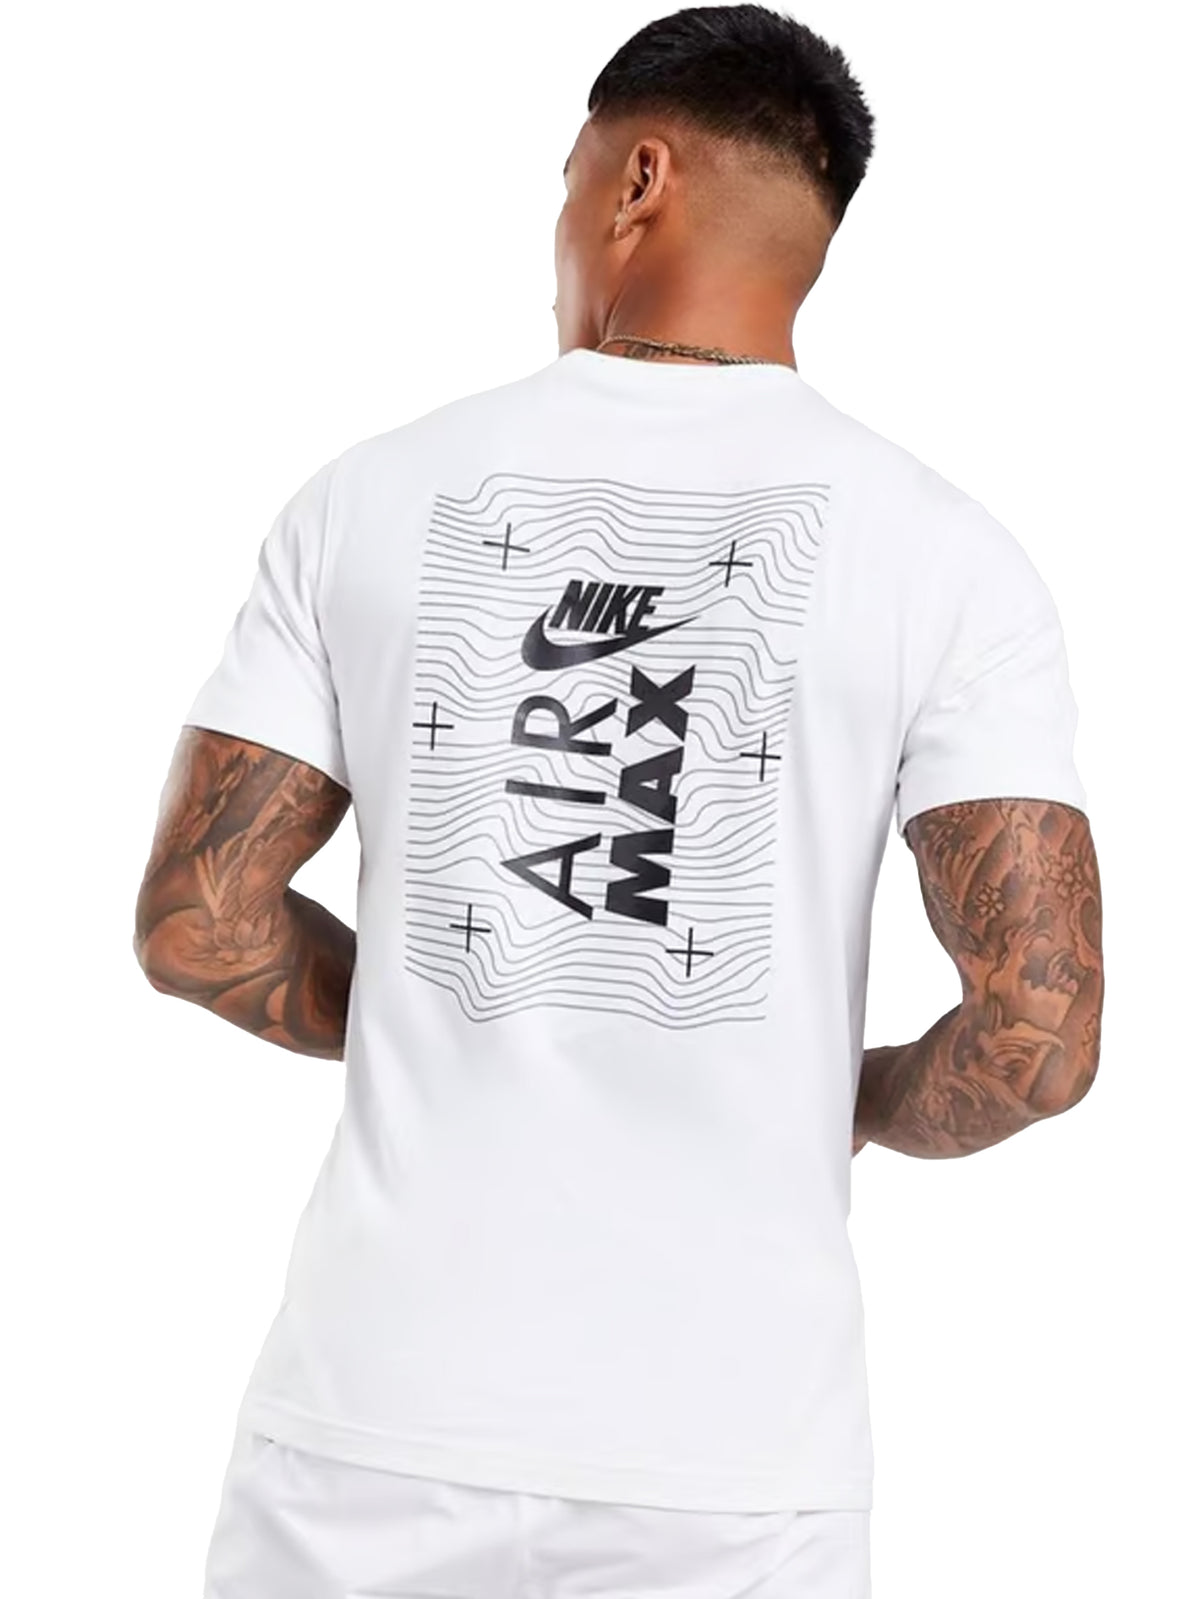 NIKE_TST_DV2335 Nike Air Max Mens Sportswear T-Shirt NIKE RAWDENIM